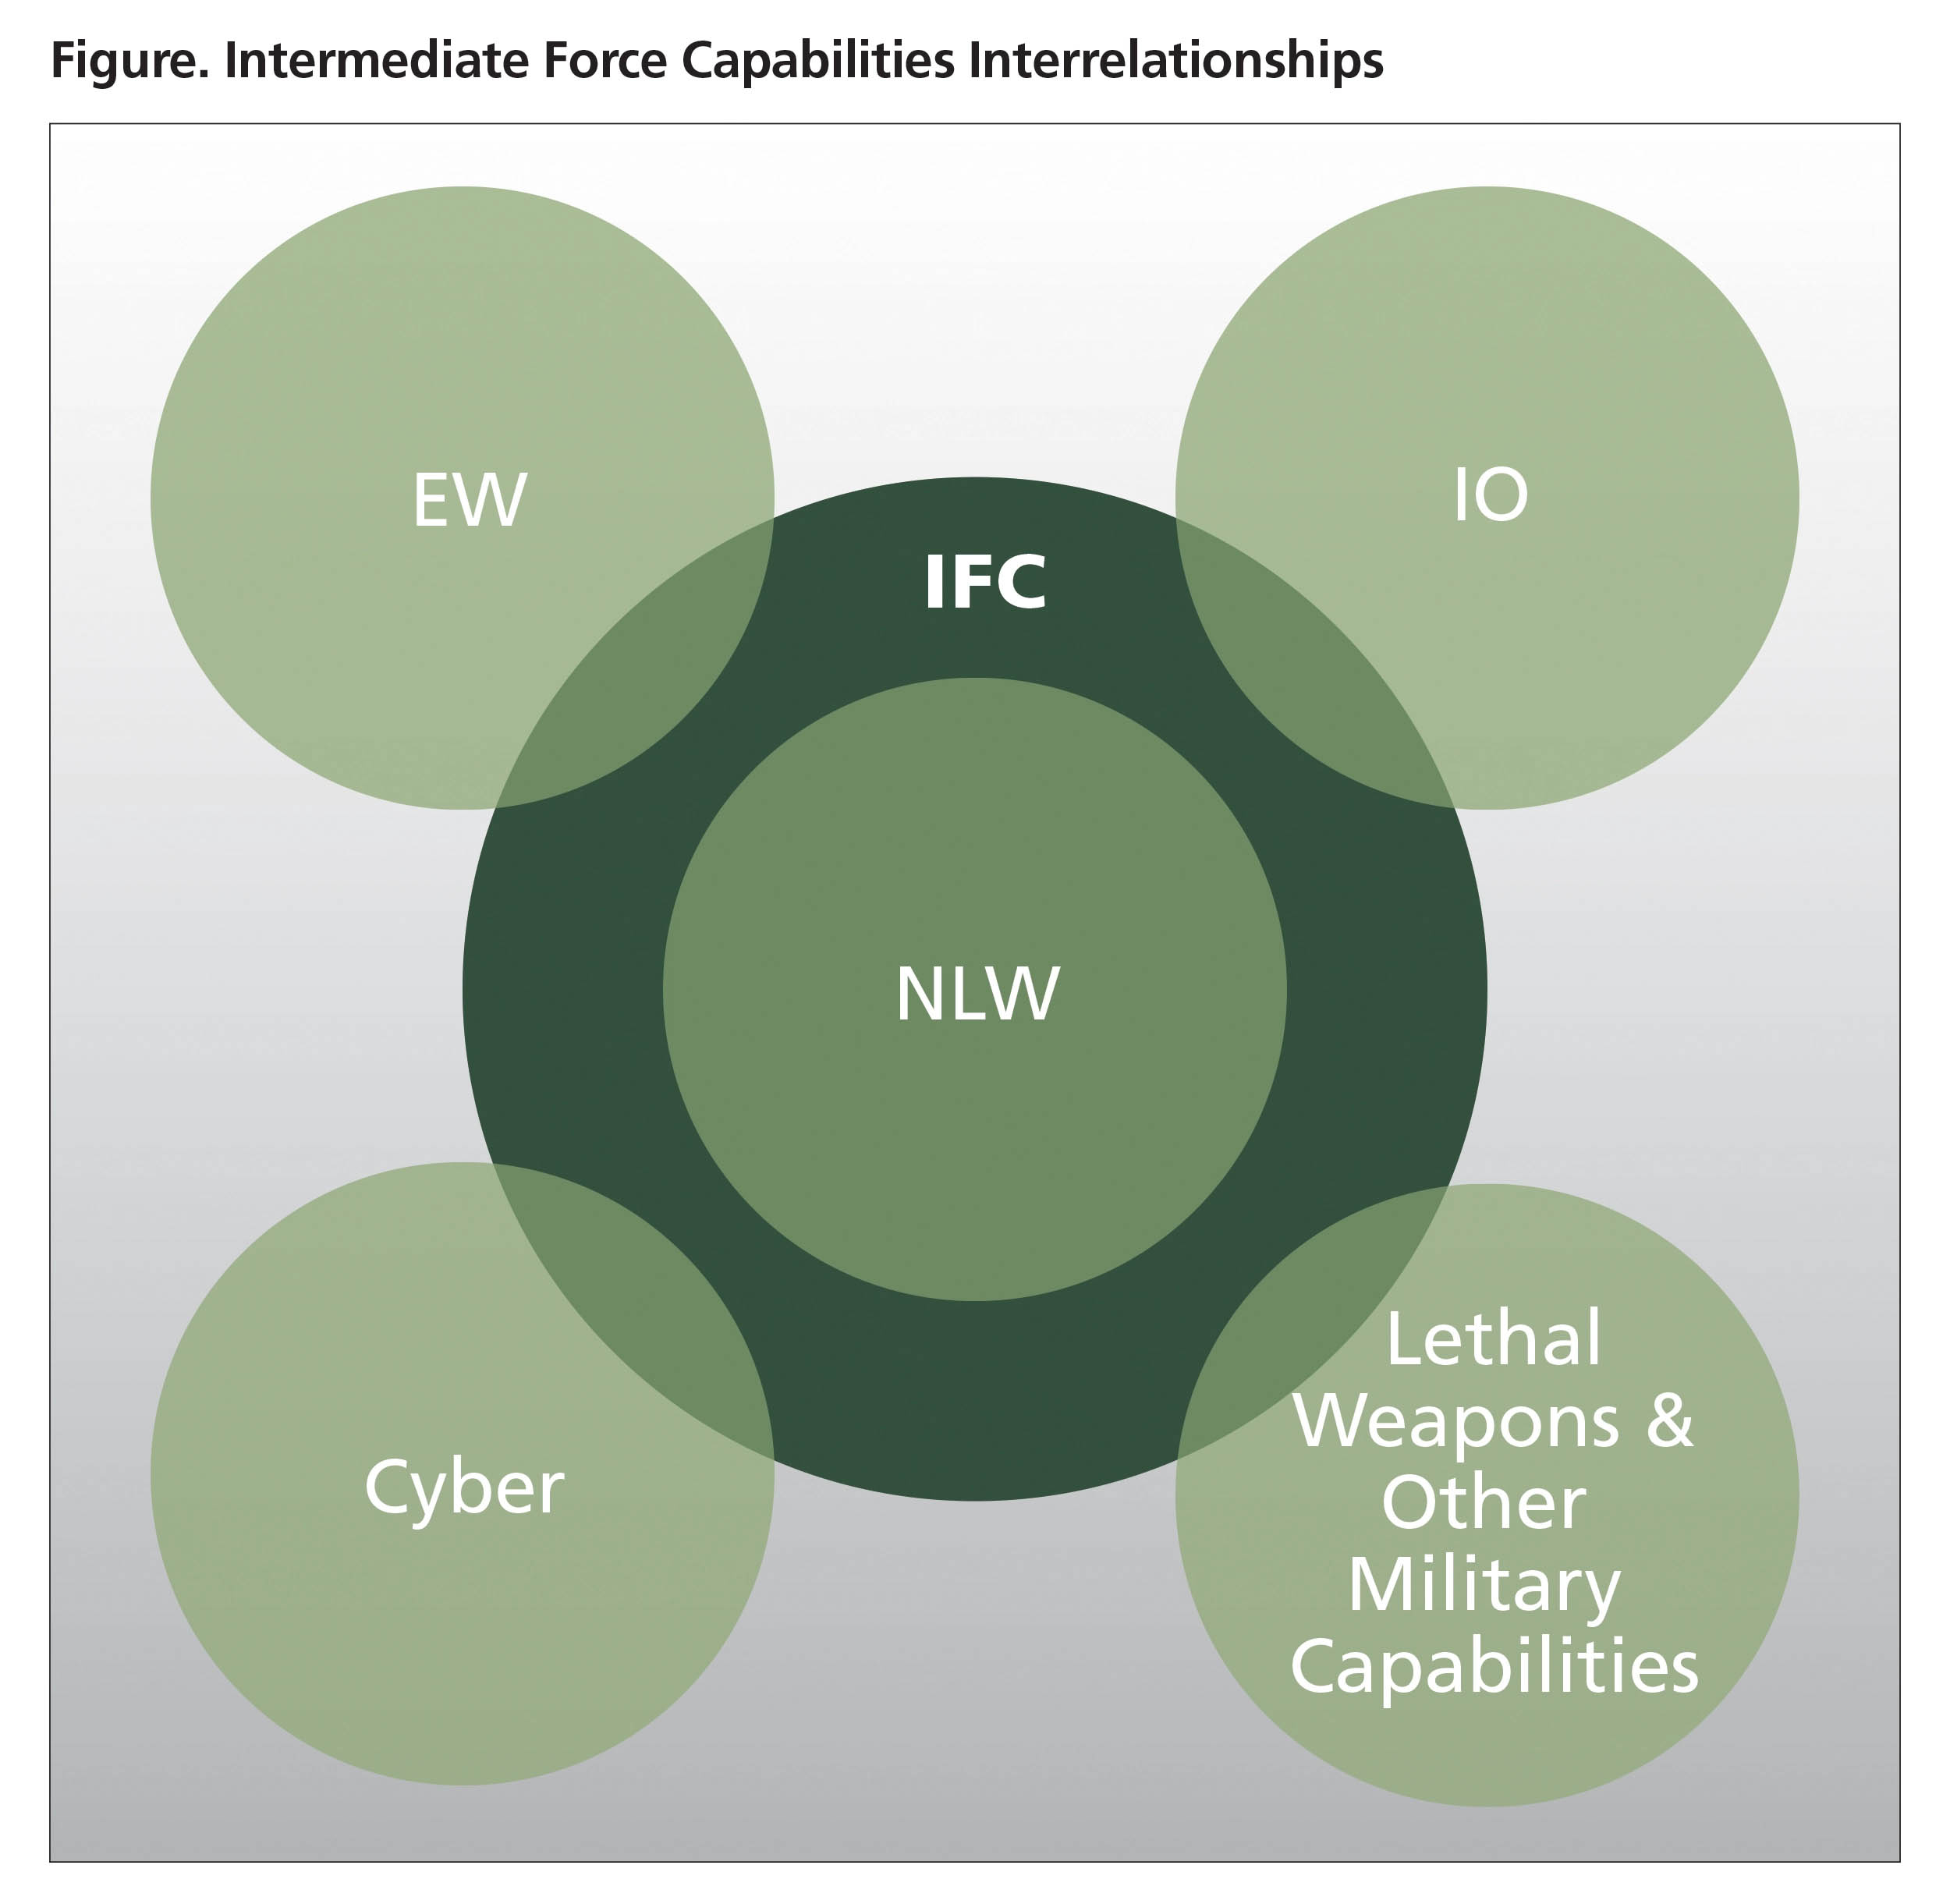 Figure. Intermediate Force Capabilities Interrelationships